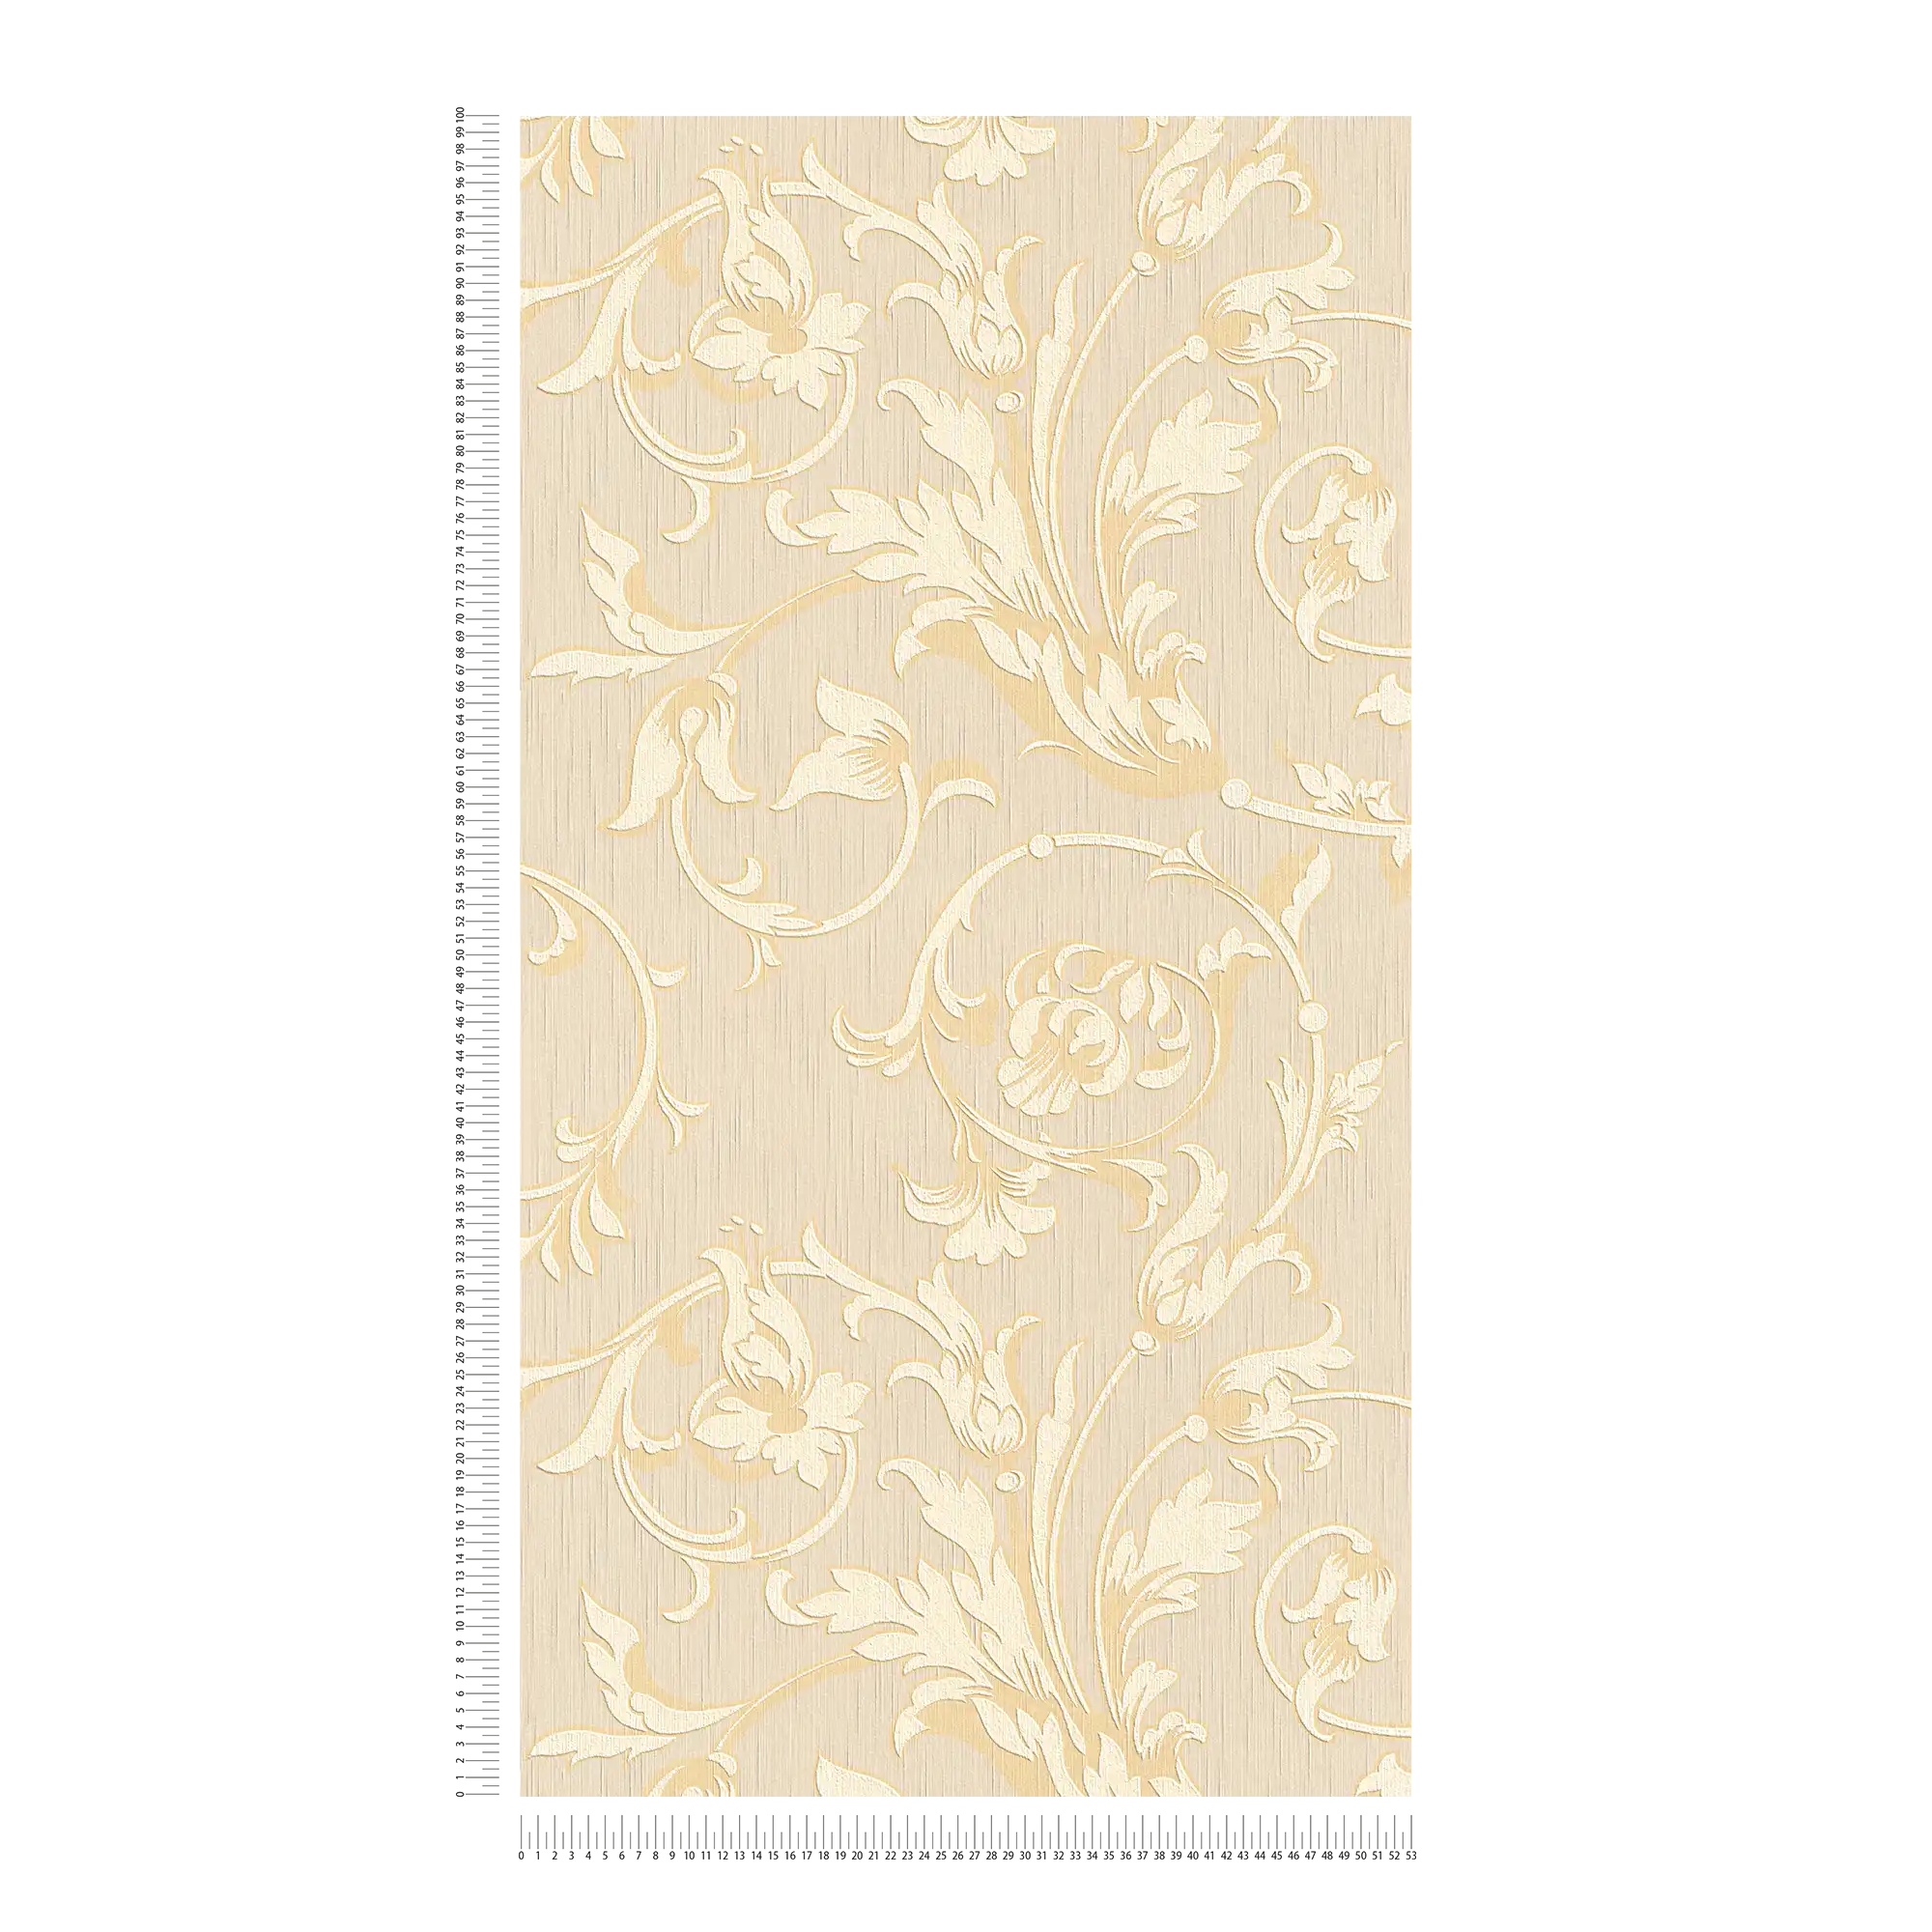             Ornament wallpaper with silk look - cream, gold, beige
        